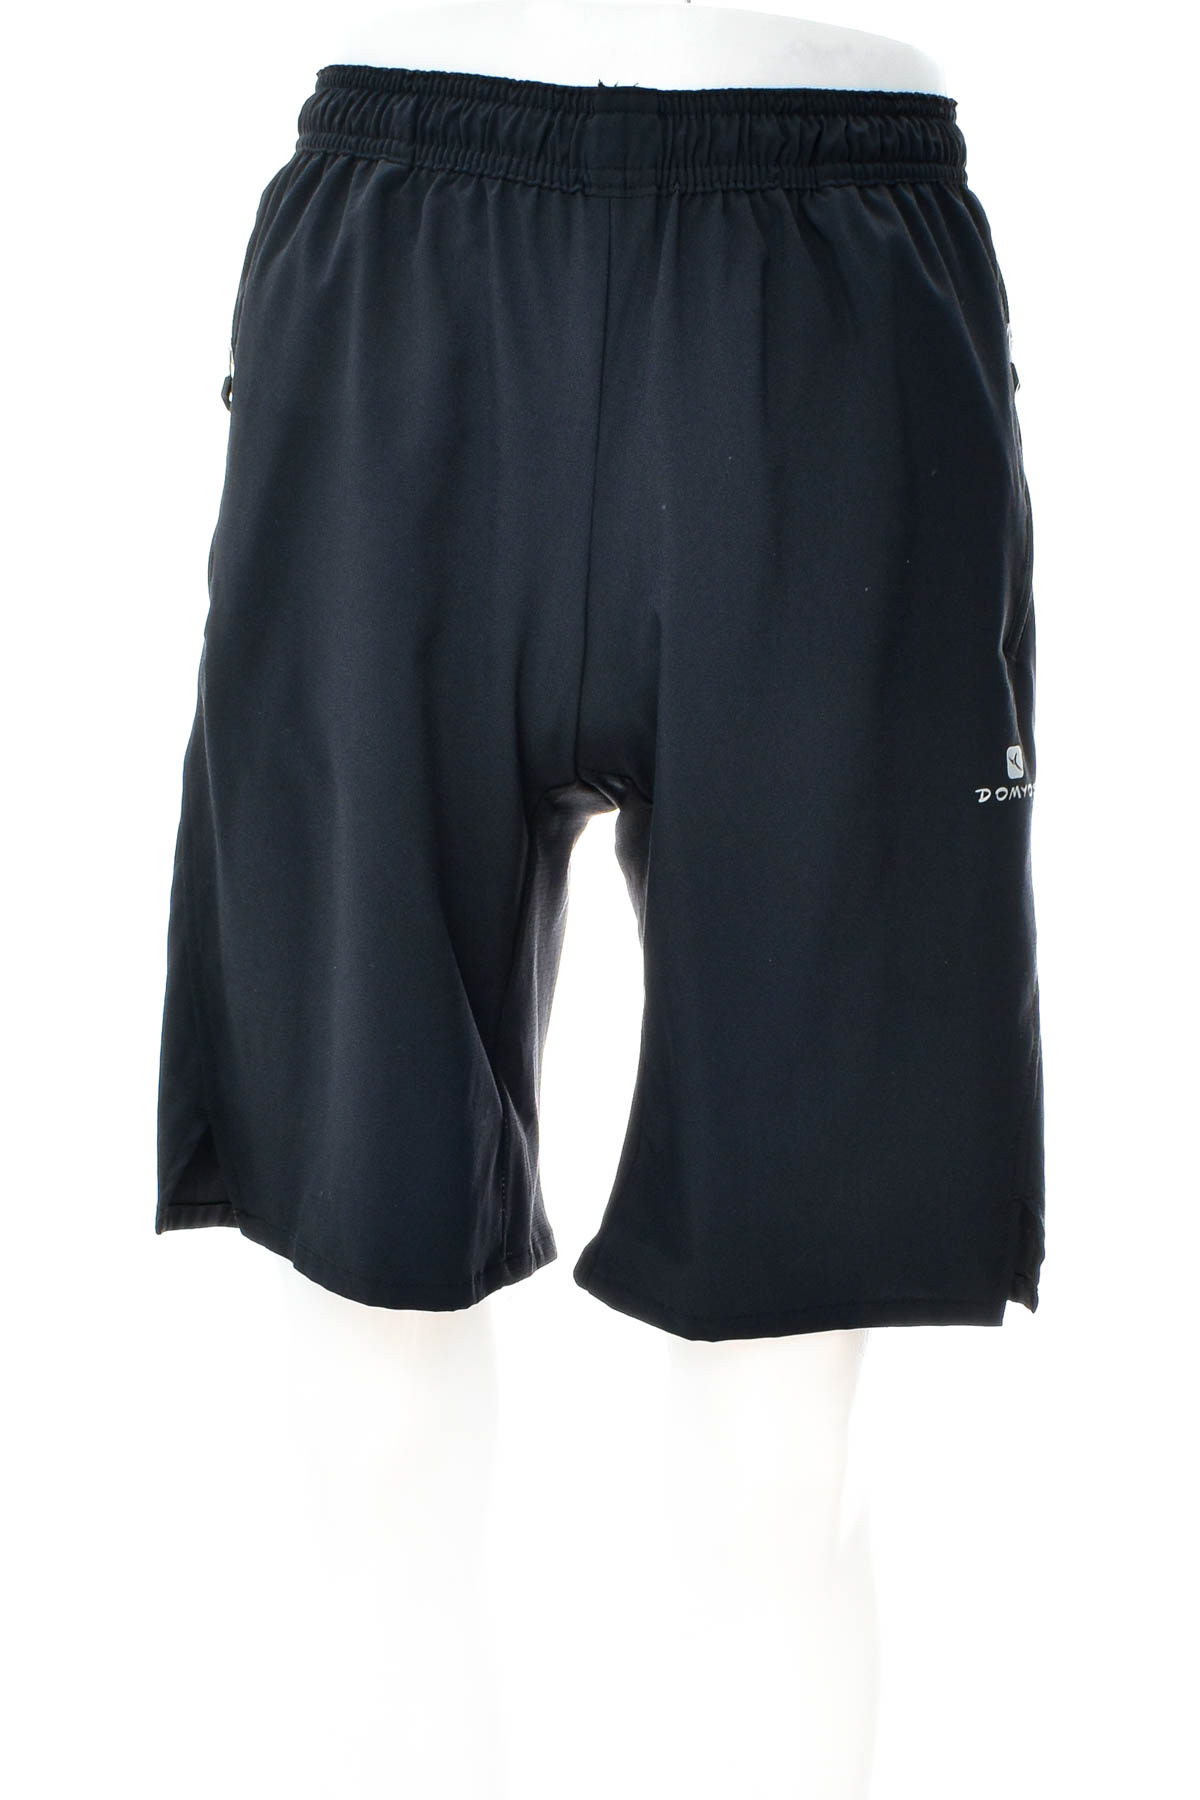 Men's shorts - Domyos - 0